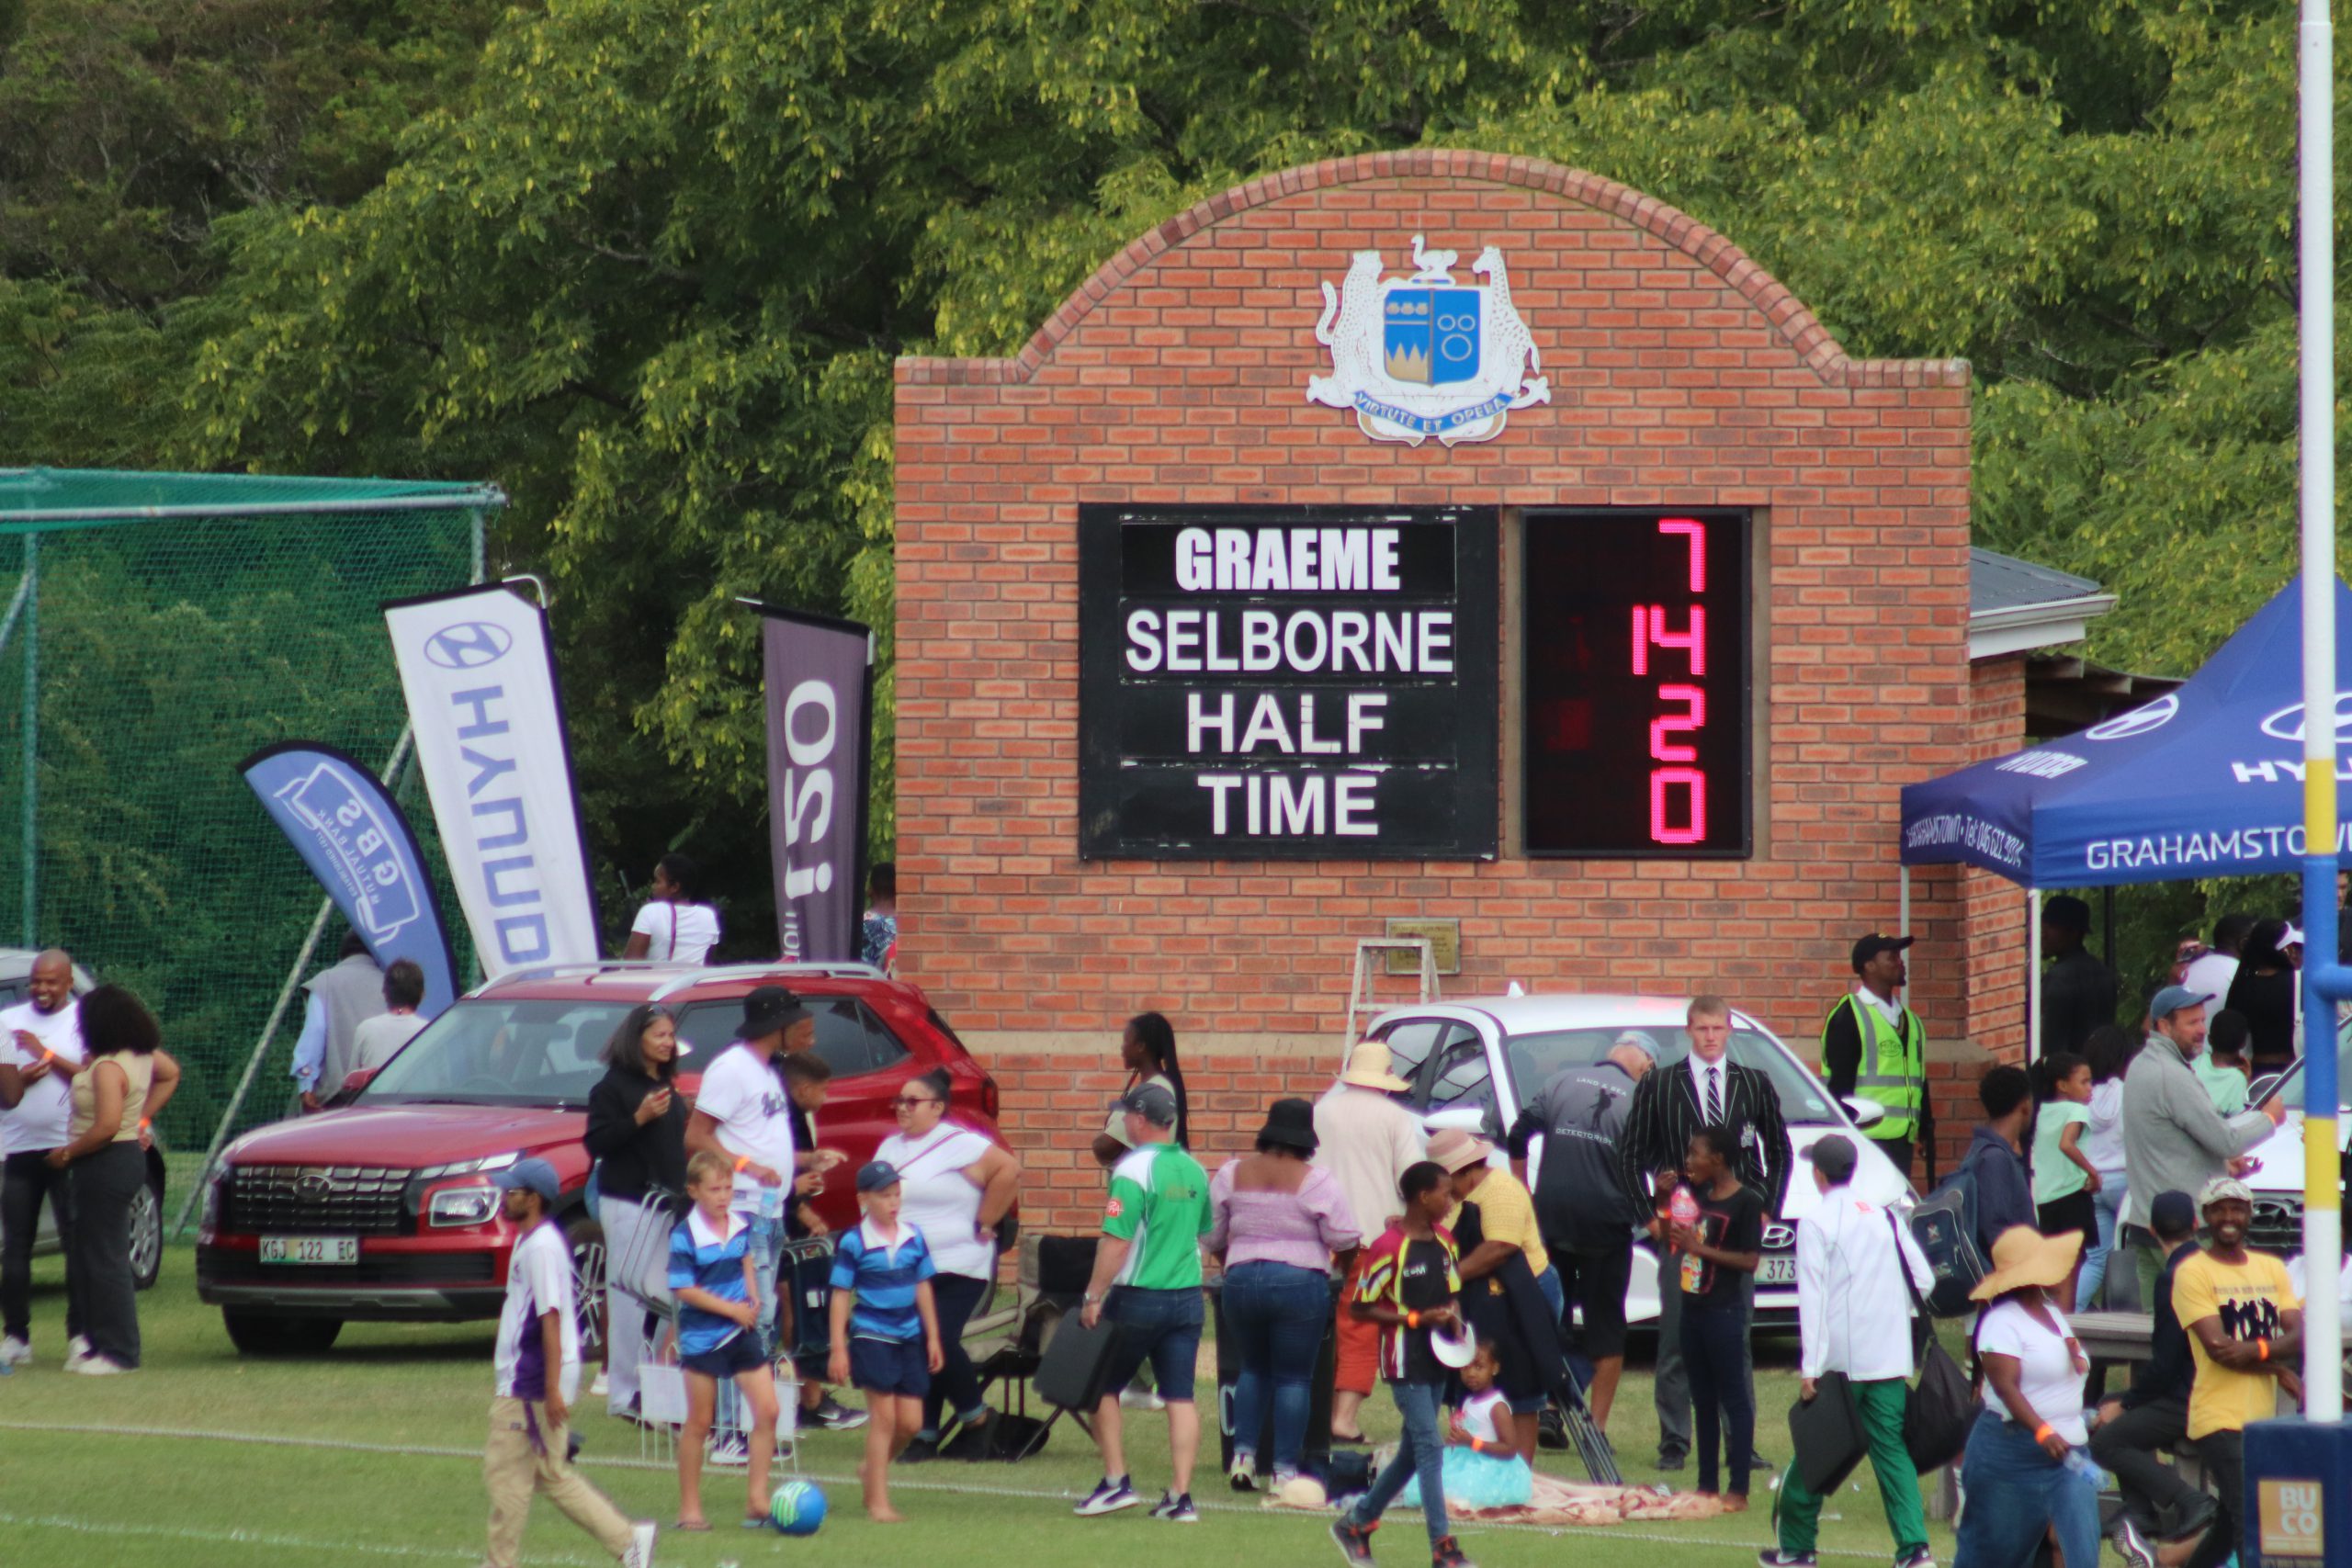 Graeme College against Selborne College from East London first team final score. Photo, Nothando Yolanda Tshuma 